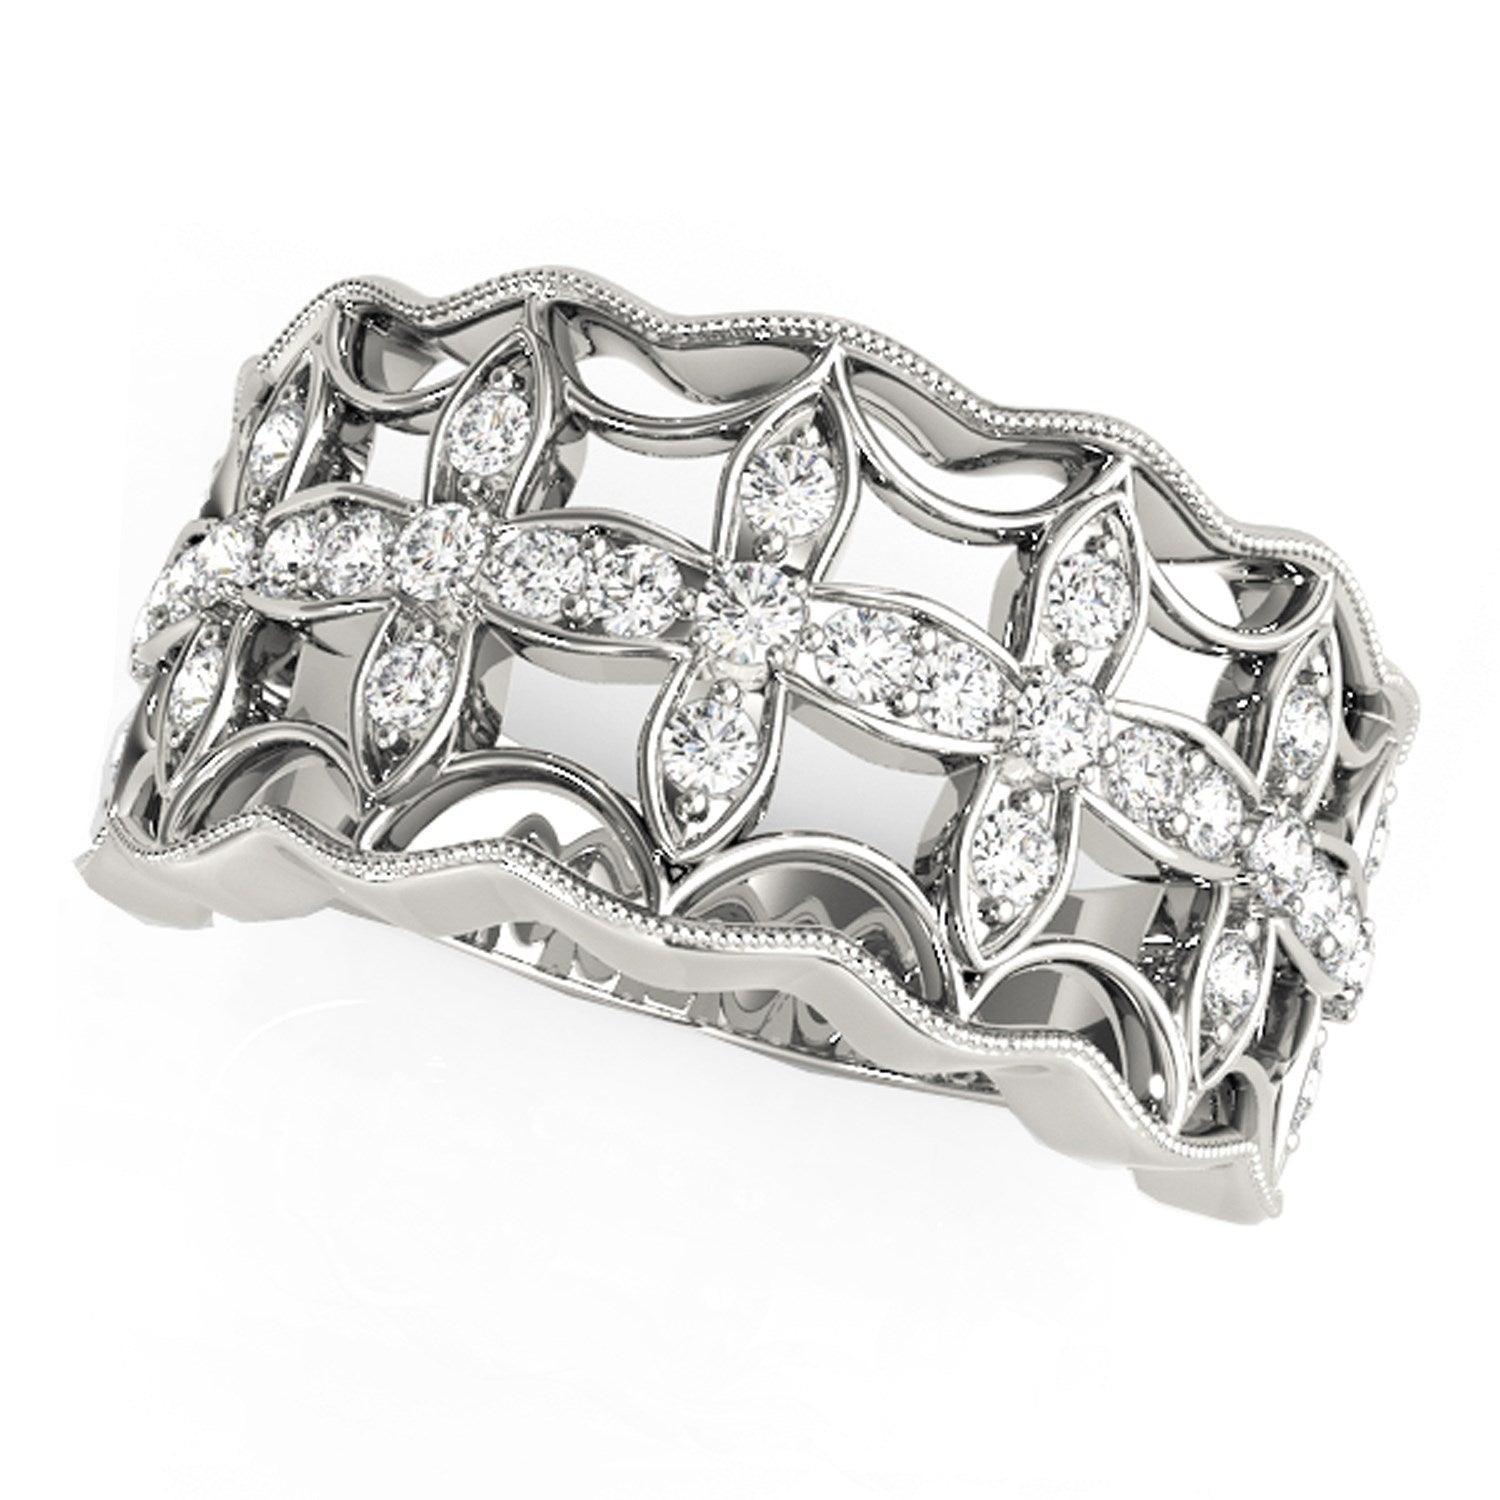 Diamond Studded Four Leaf Clover Motif Ring In 14K White Gold 1 4 Cttw 87677-1